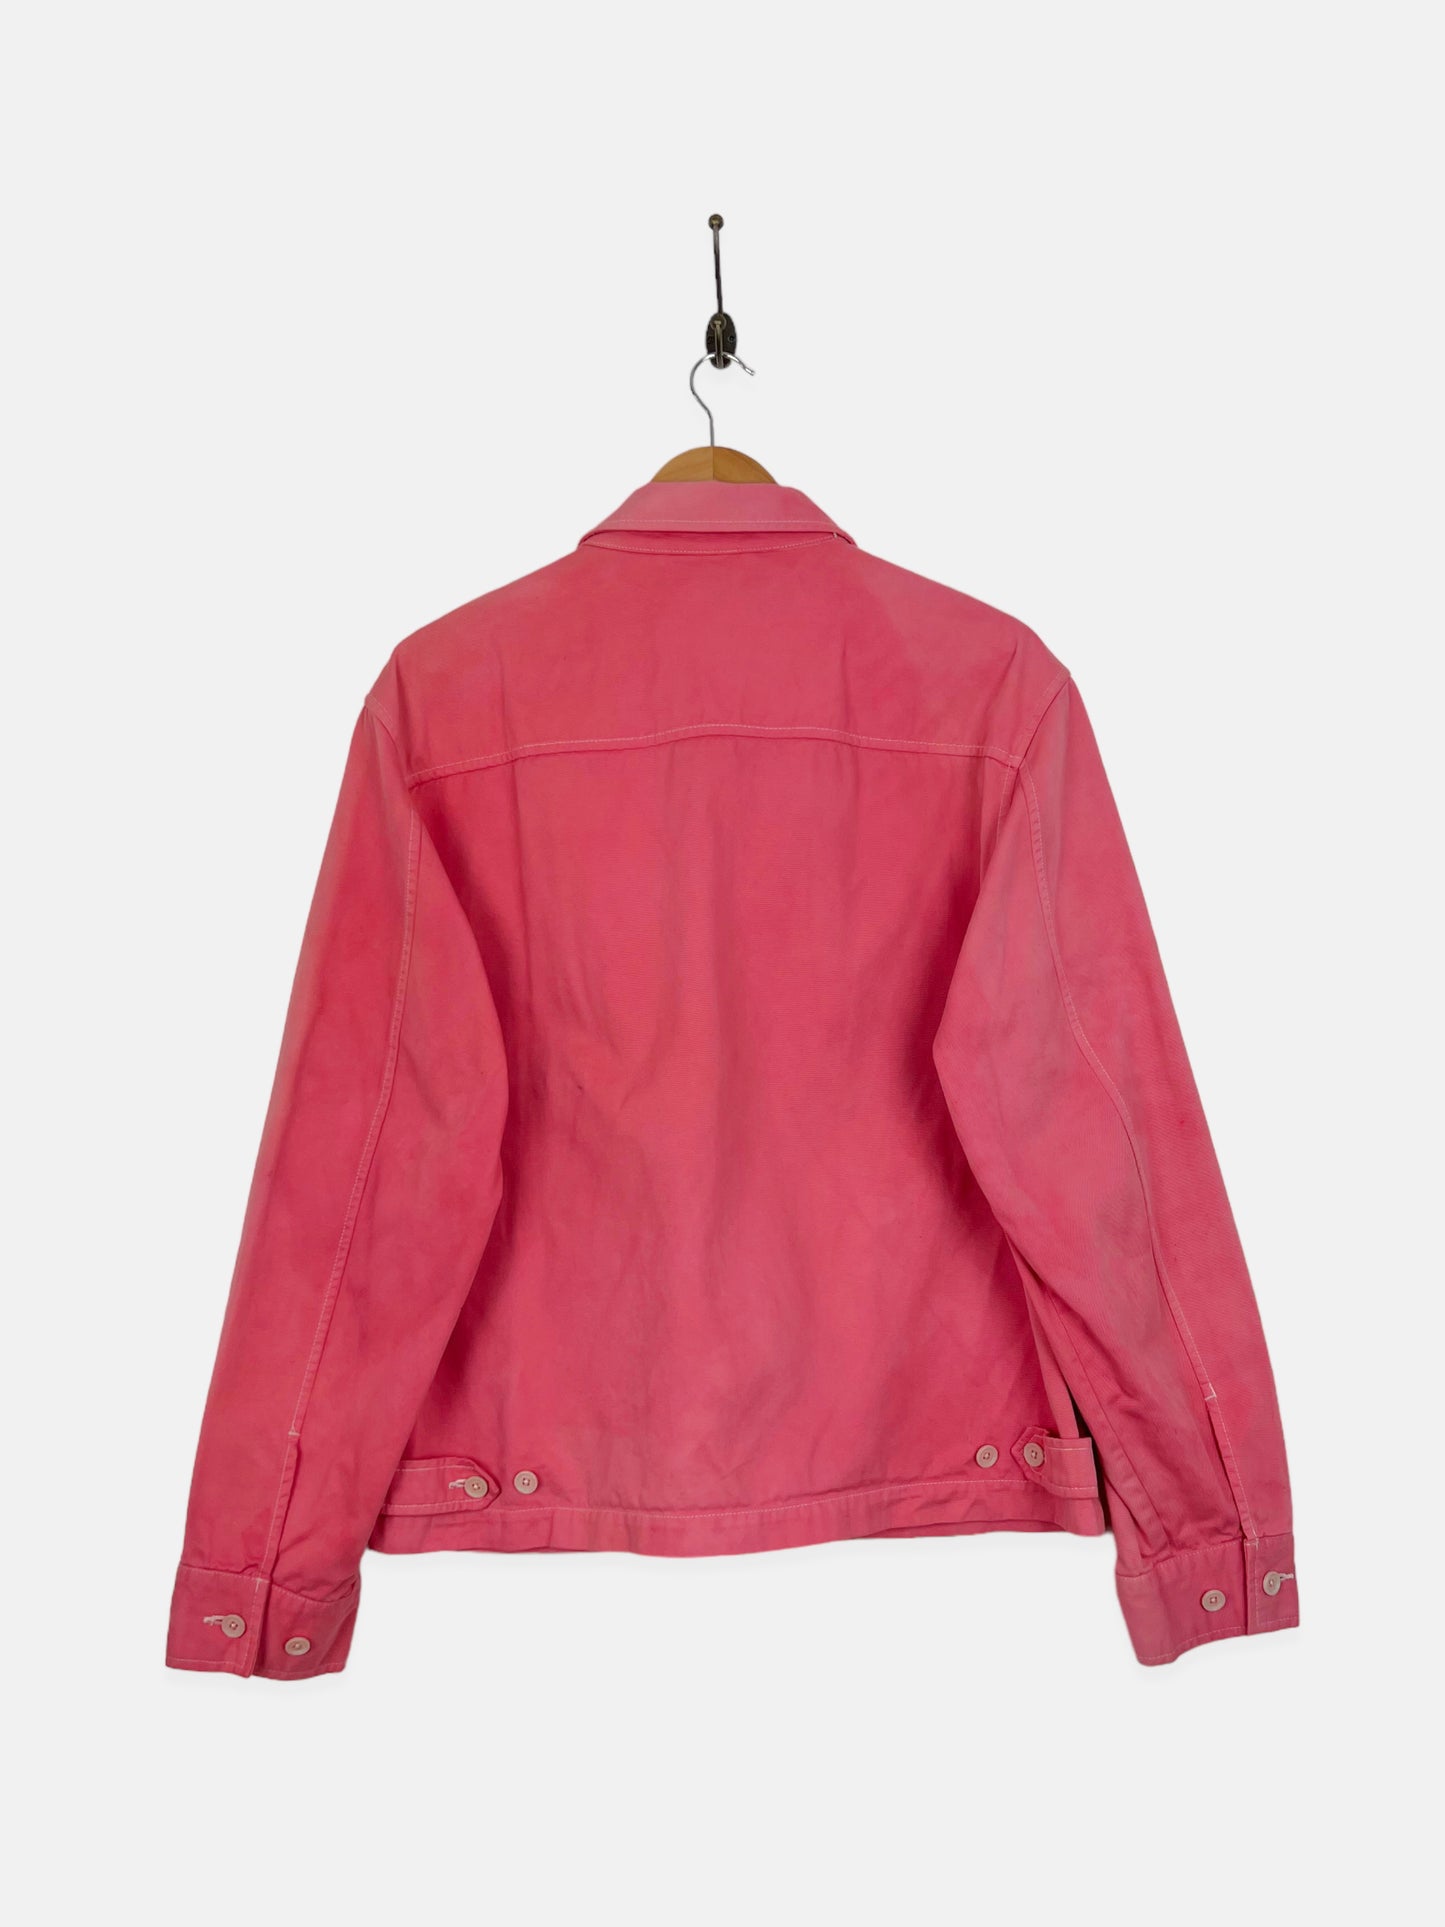 90's Ralph Lauren Embroidered Vintage Jacket Size 12-14